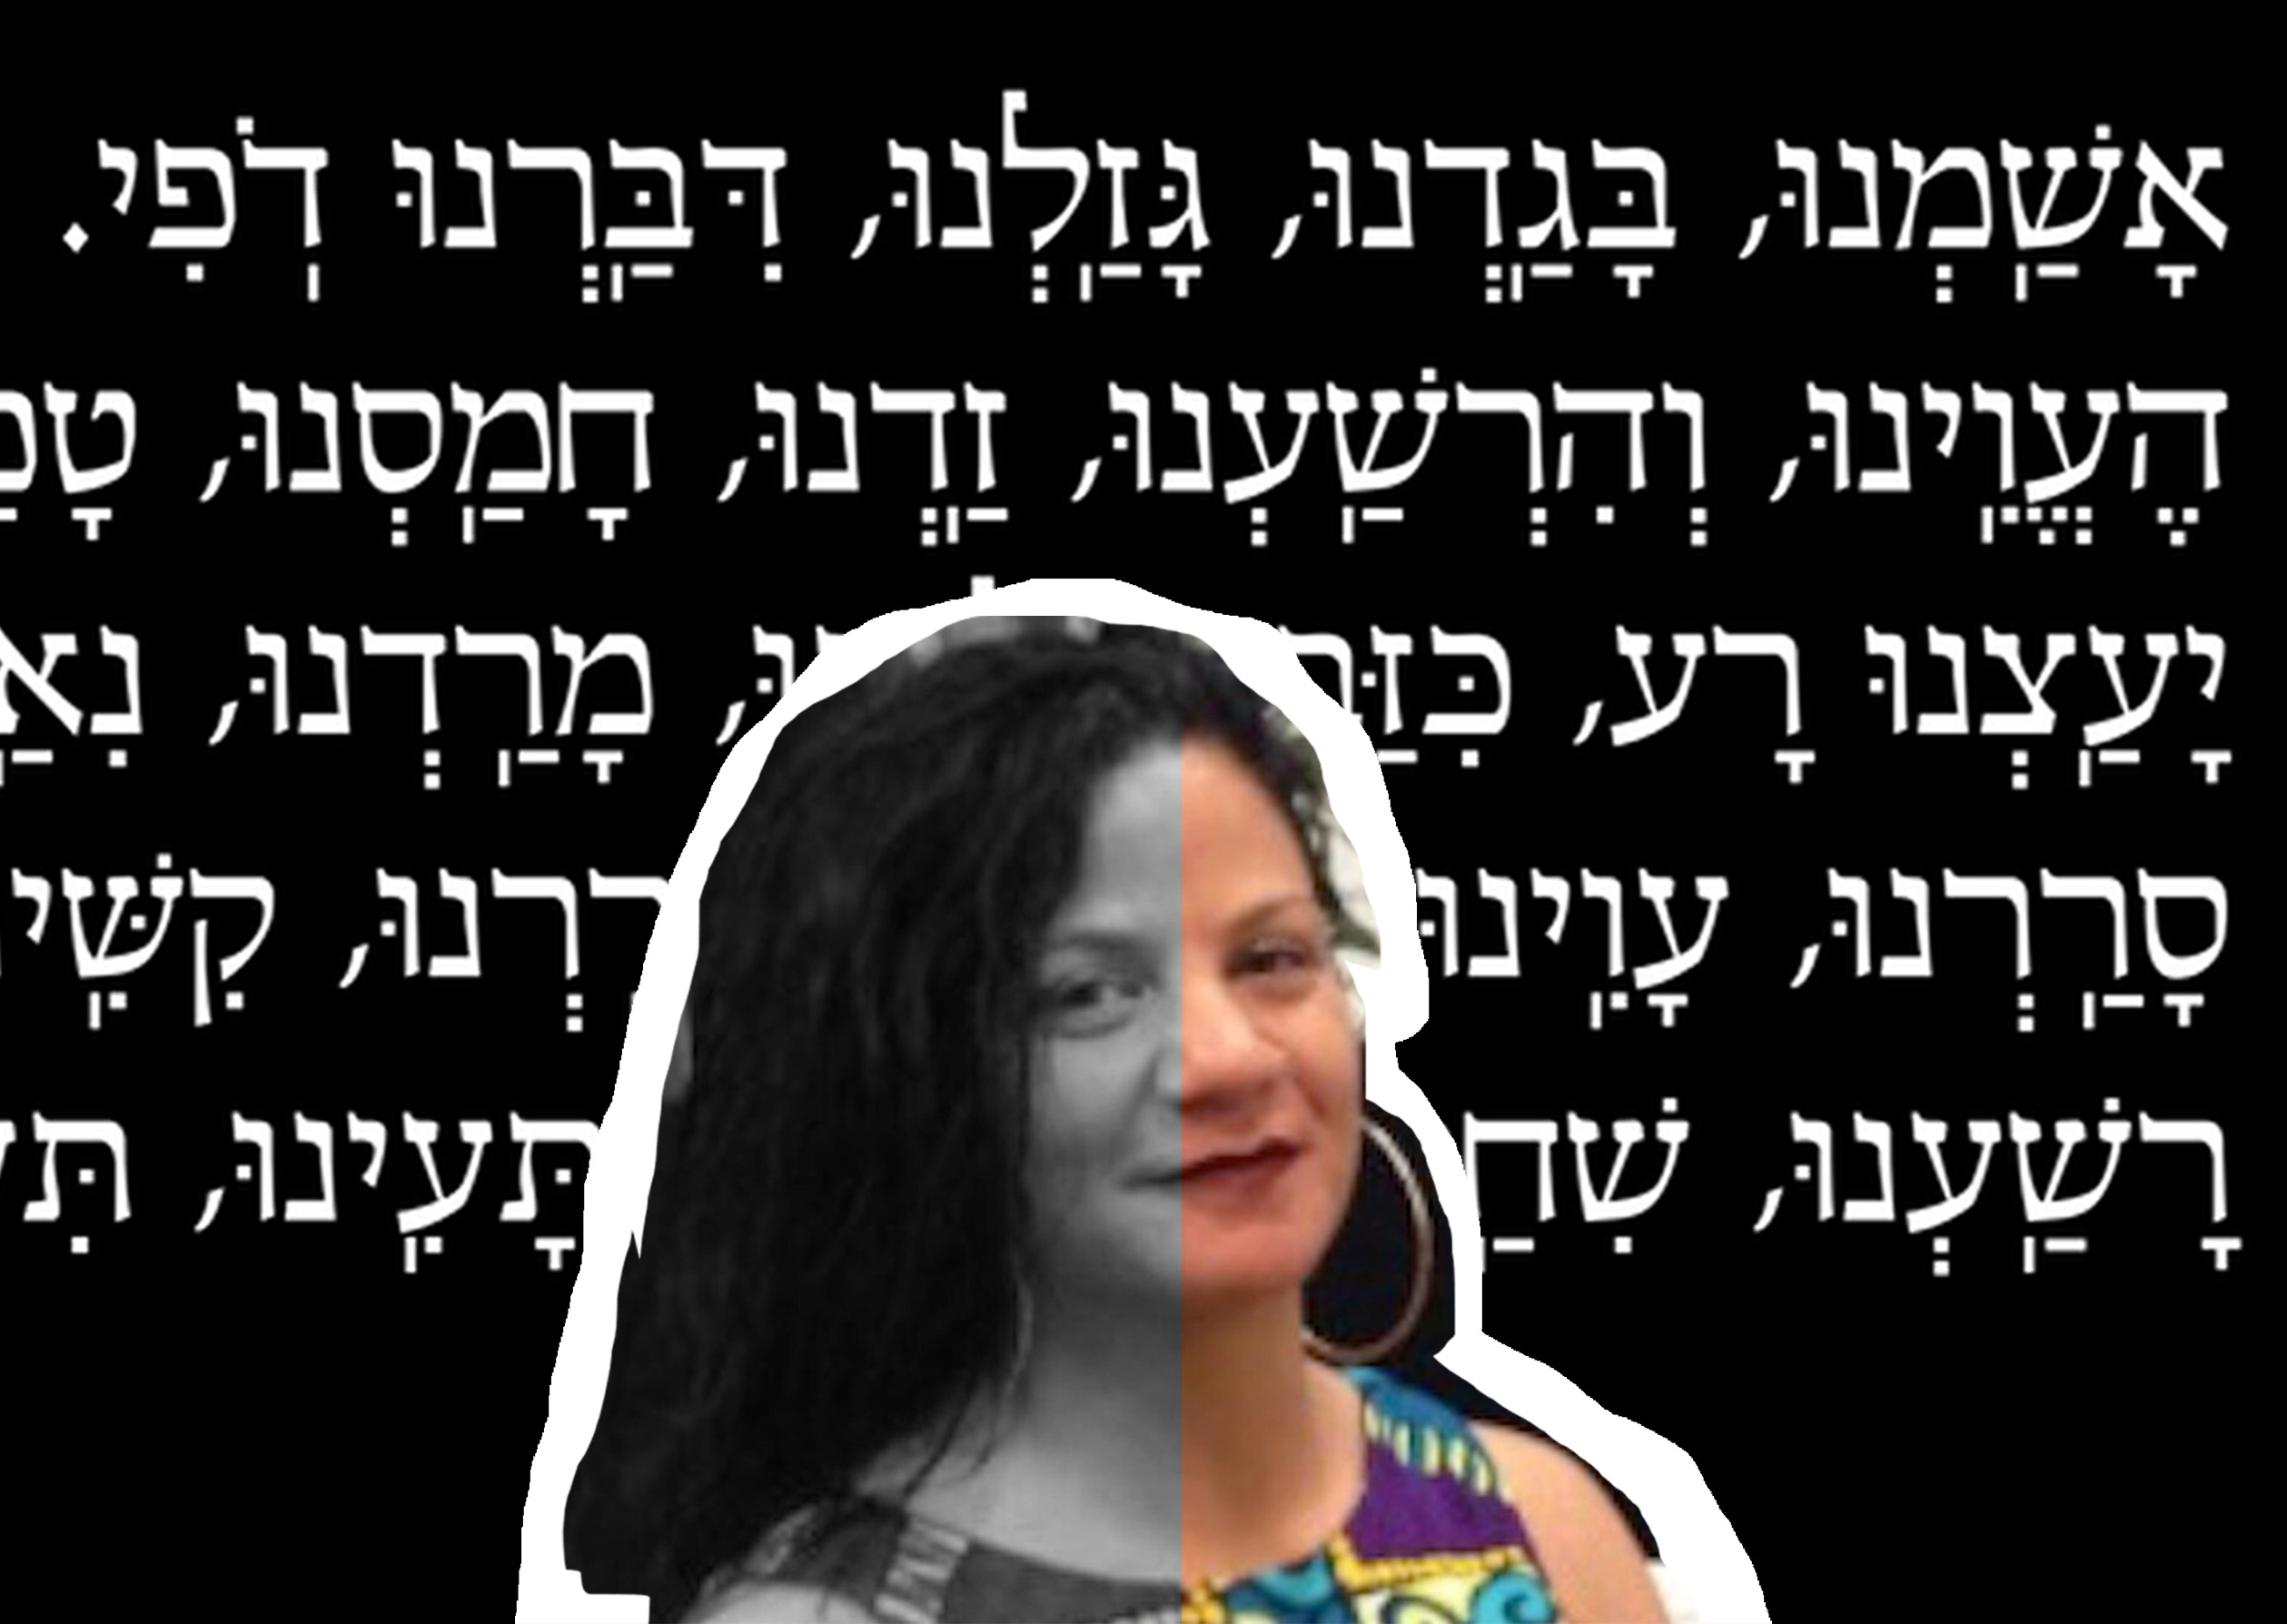 The "ashamnu" yom kippur prayer written across the black background surrounding the face of Jessica Krug